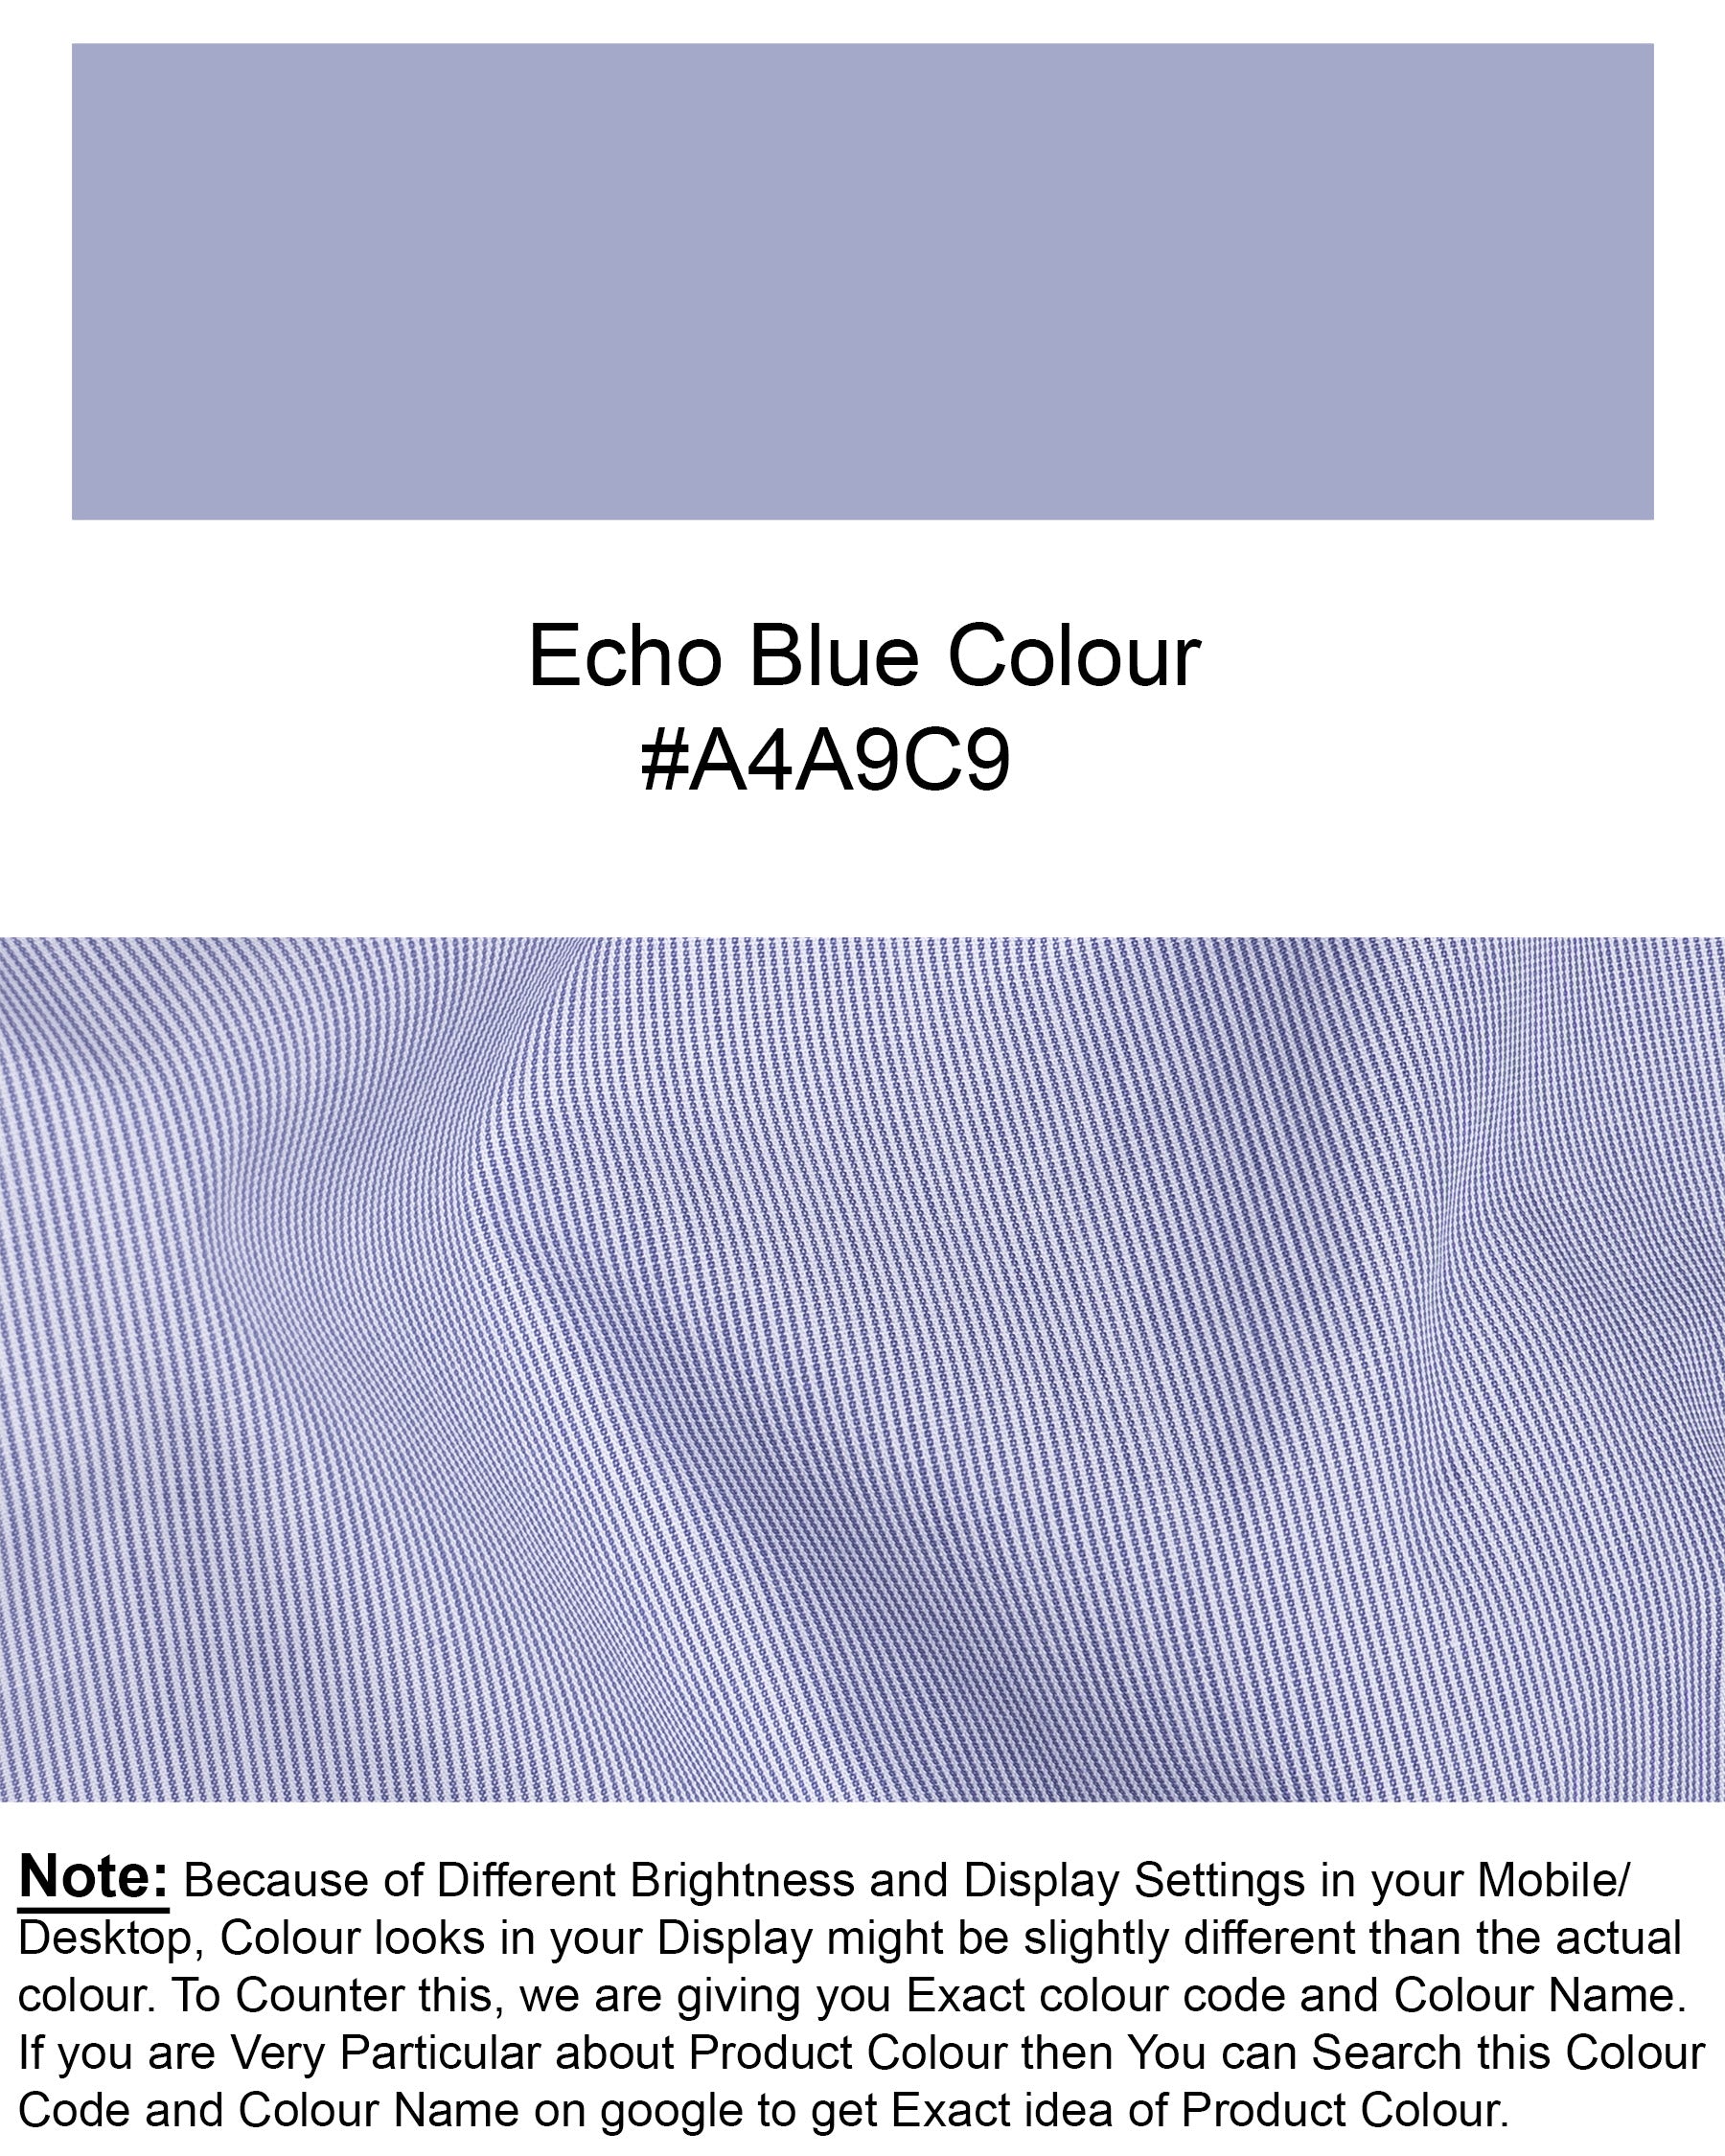 Echo Blue Pinstriped Premium Cotton Shirt 5648-BLE-38, 5648-BLE-H-38, 5648-BLE-39, 5648-BLE-H-39, 5648-BLE-40, 5648-BLE-H-40, 5648-BLE-42, 5648-BLE-H-42, 5648-BLE-44, 5648-BLE-H-44, 5648-BLE-46, 5648-BLE-H-46, 5648-BLE-48, 5648-BLE-H-48, 5648-BLE-50, 5648-BLE-H-50, 5648-BLE-52, 5648-BLE-H-52